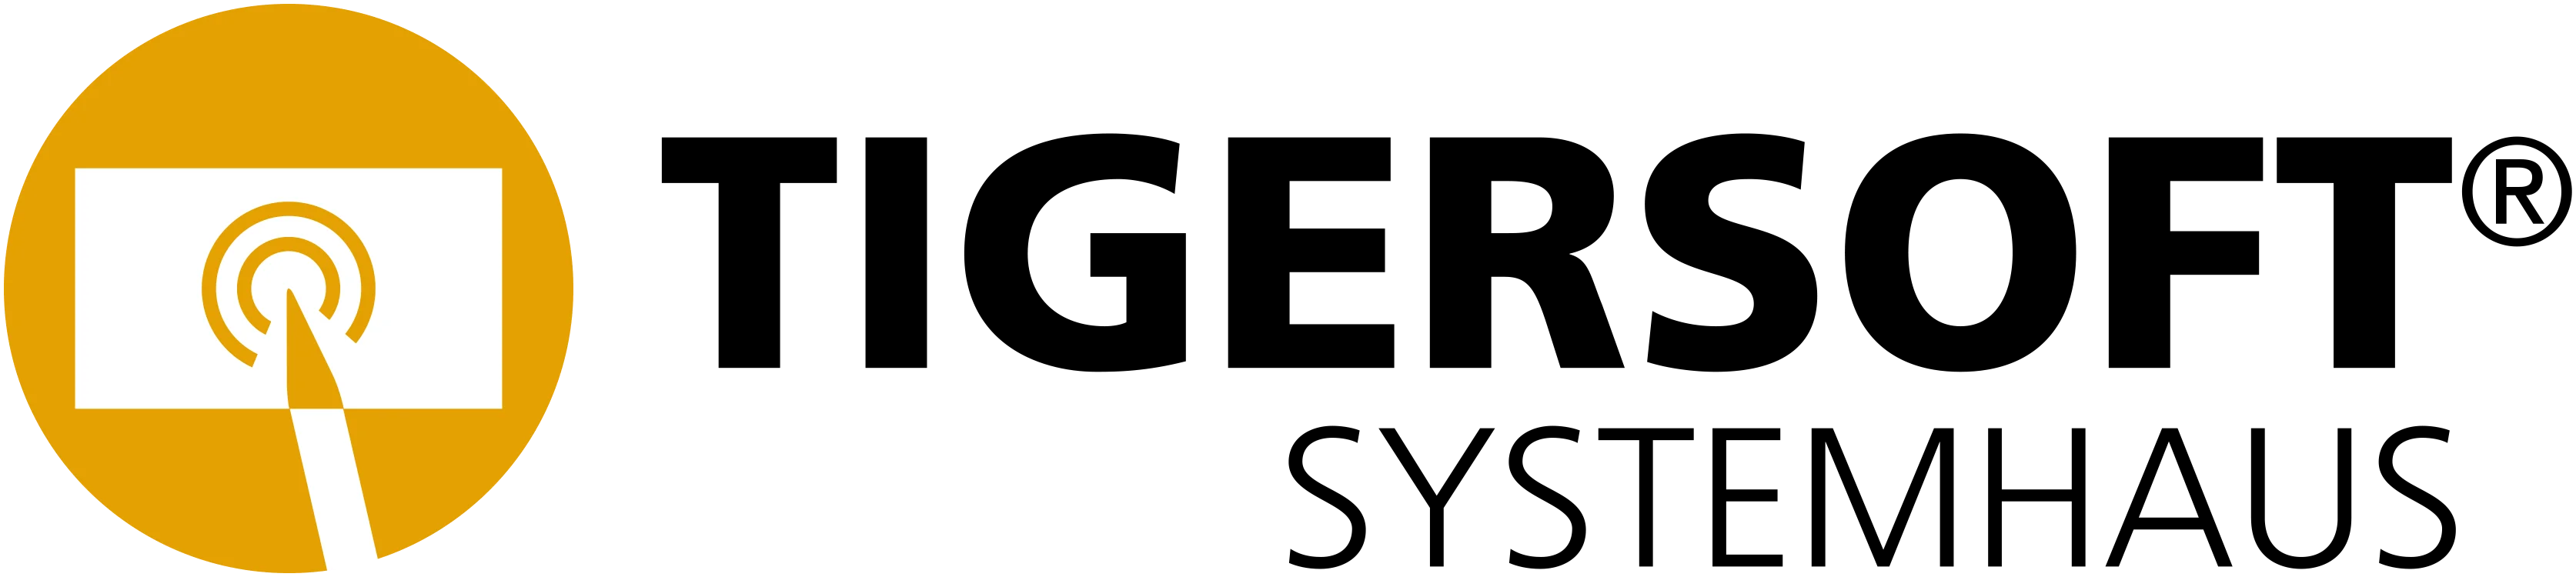 Tigersoft Systemhaus Logo